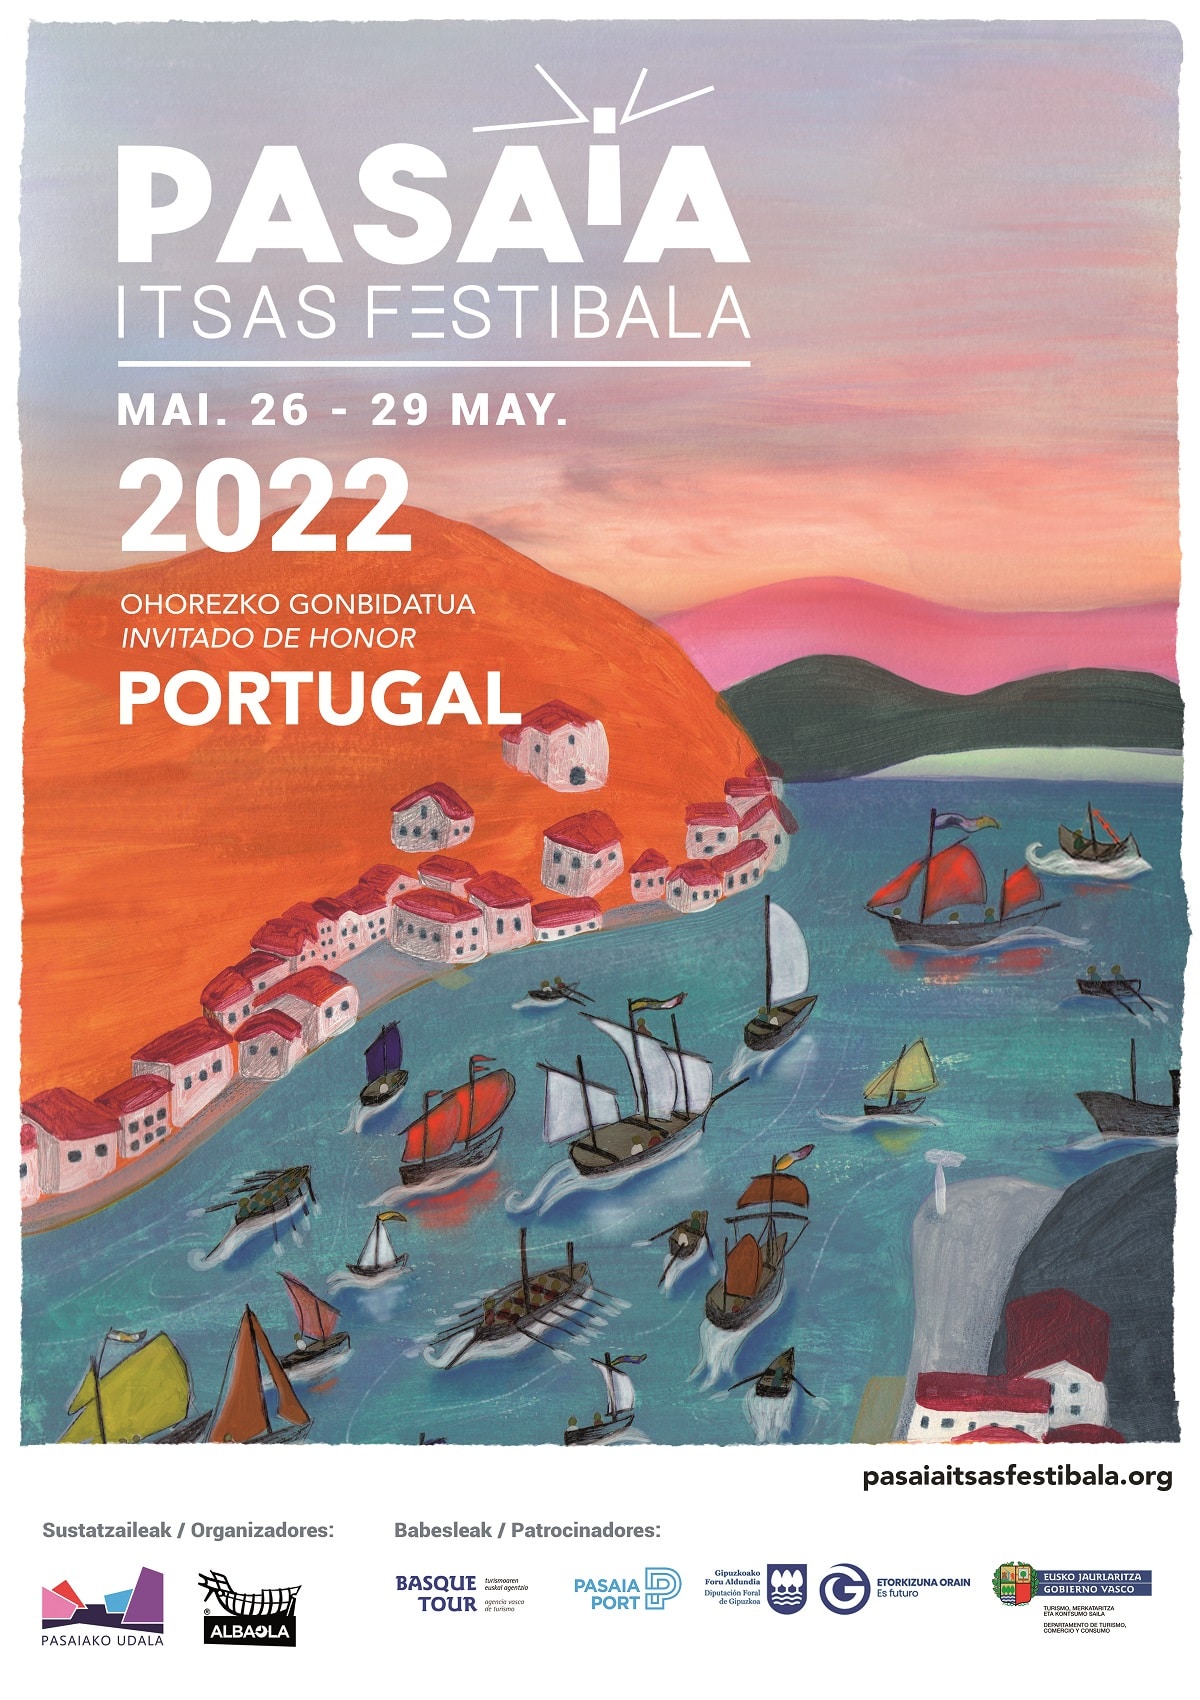 2022 PASAIA ITSAS FESTIBALA KARTELA - El II Pasaia Itsas Festibala se hará realidad del 26 al 29 de mayo de 2022